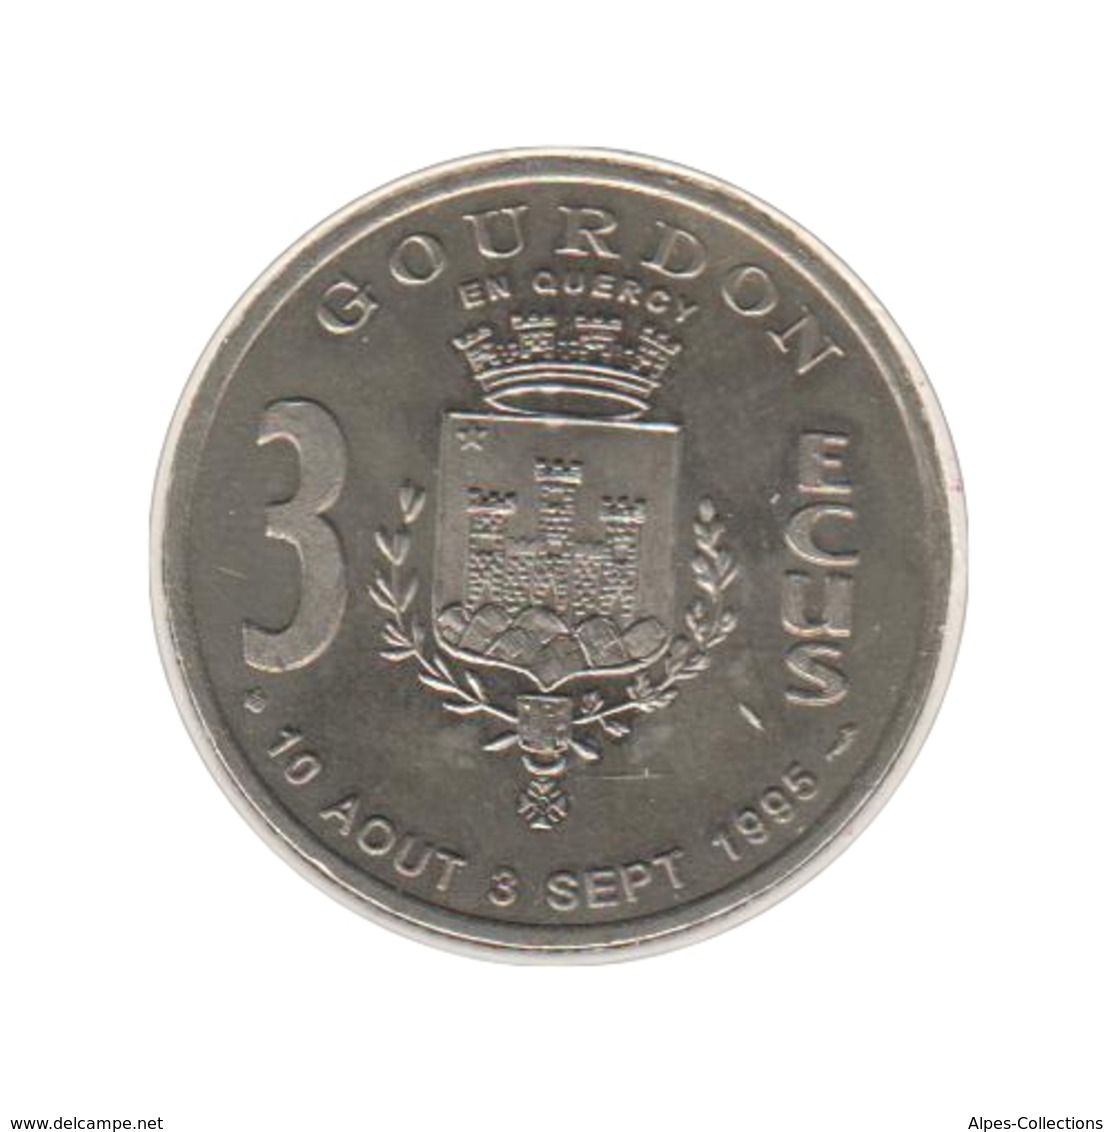 GOURDON - EC0030.1 - 3 ECU DES VILLES - Réf: T63 - 1995 - Euros De Las Ciudades